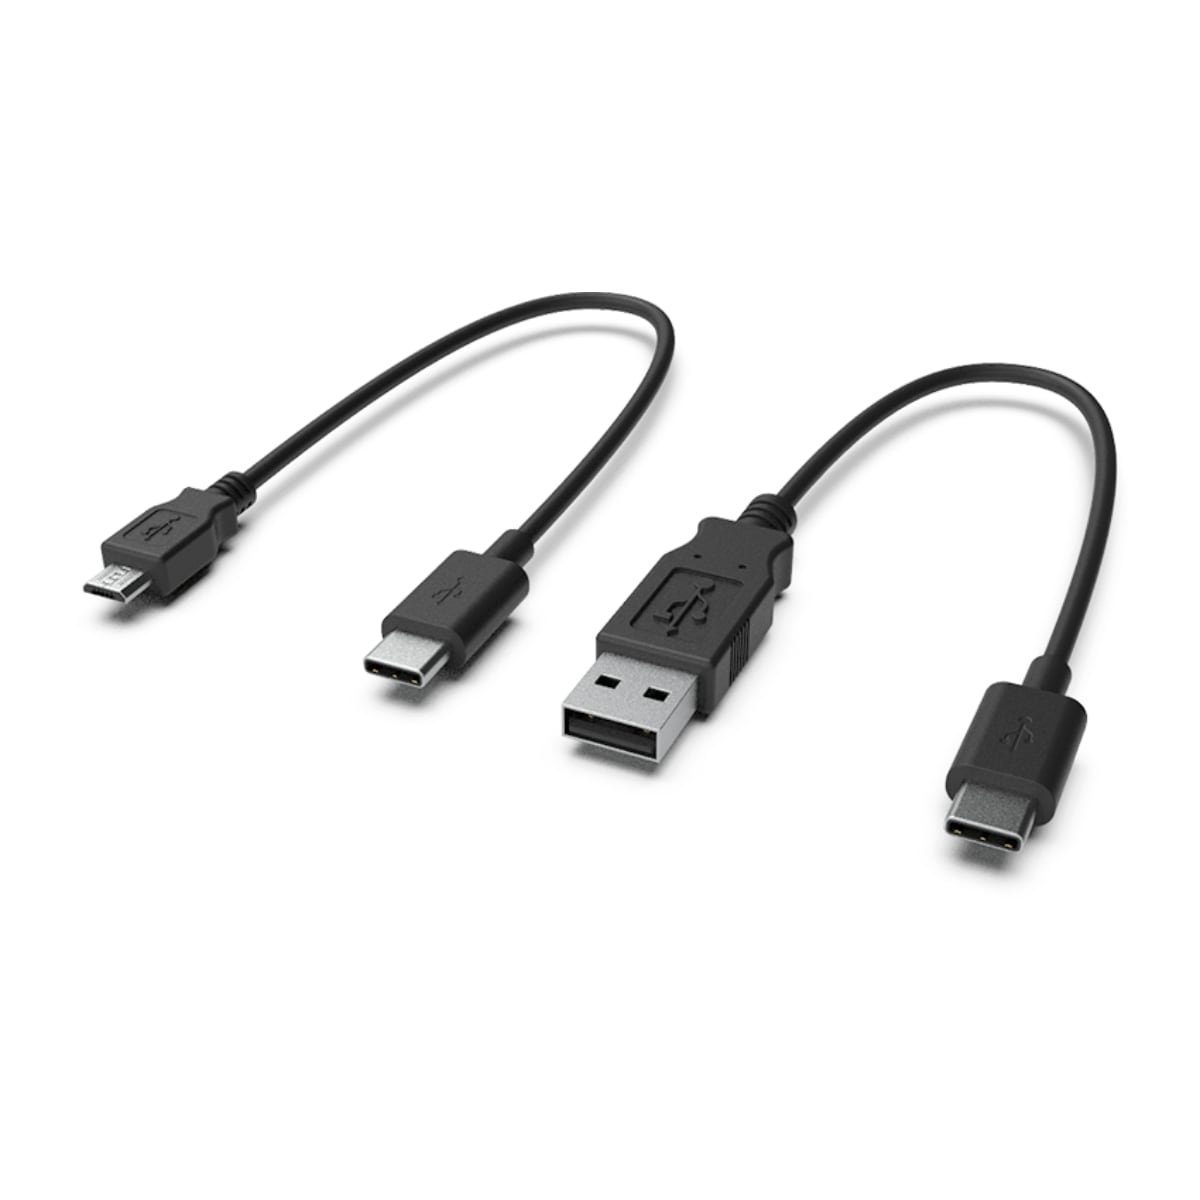 CME USB micro-B OTG cable pack II for WIDI Uhost